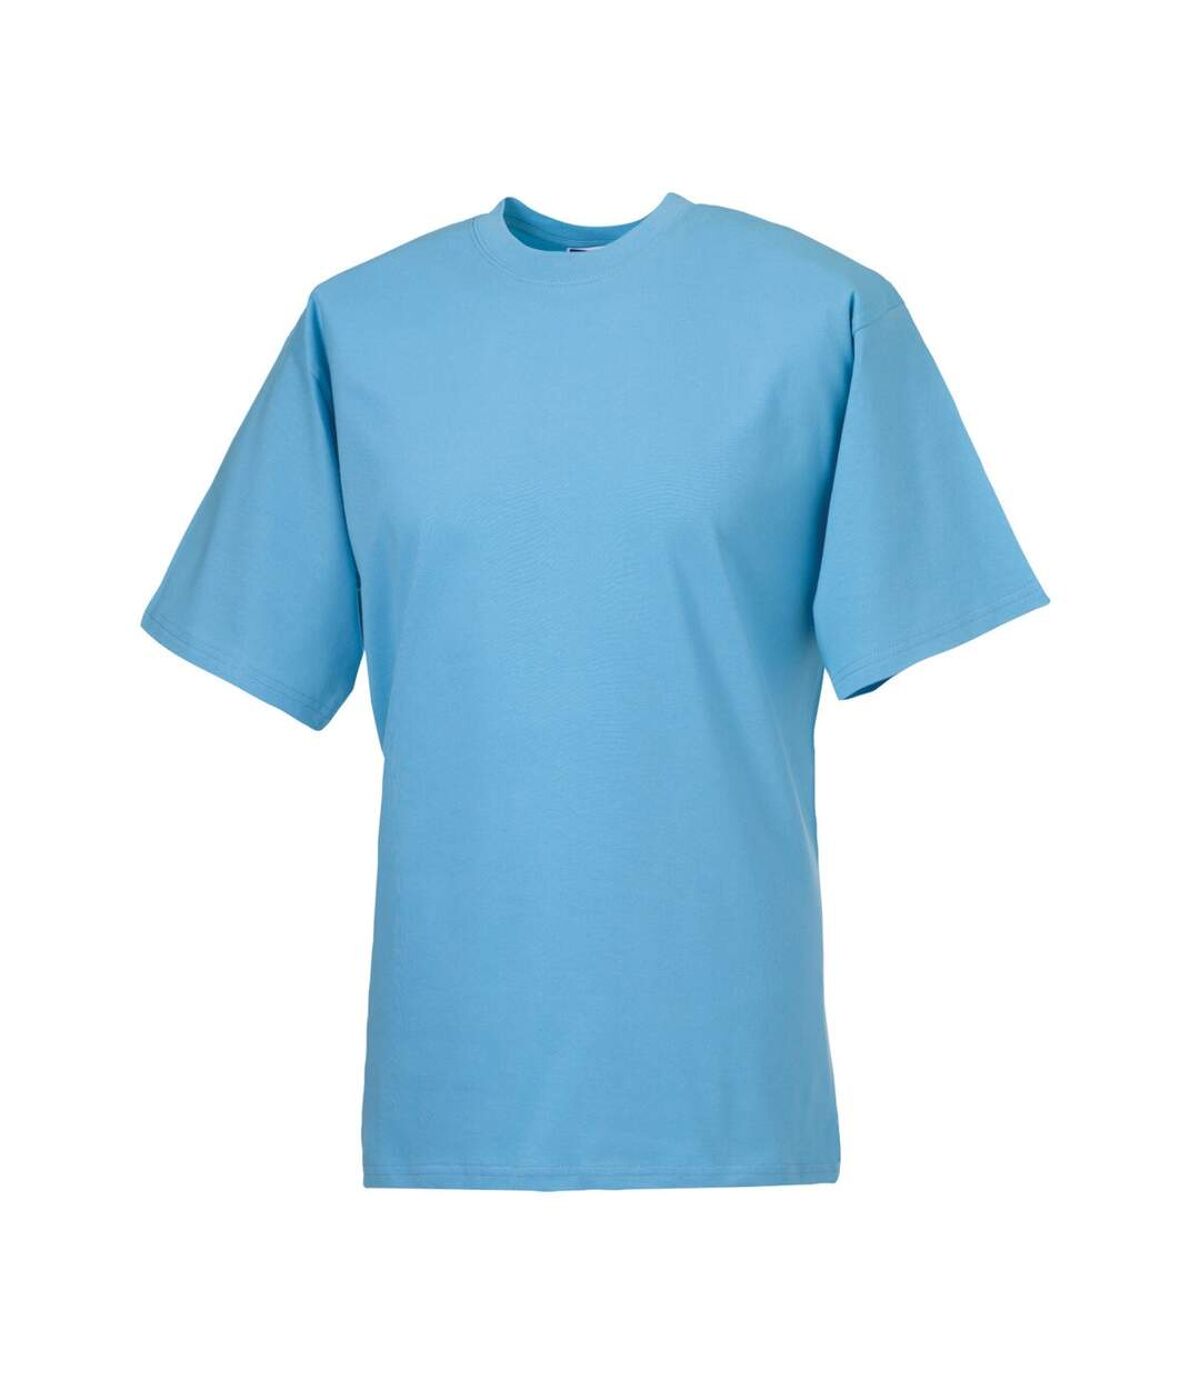 Jerzees Colours Mens Classic Short Sleeve T-Shirt (Bottle Green)